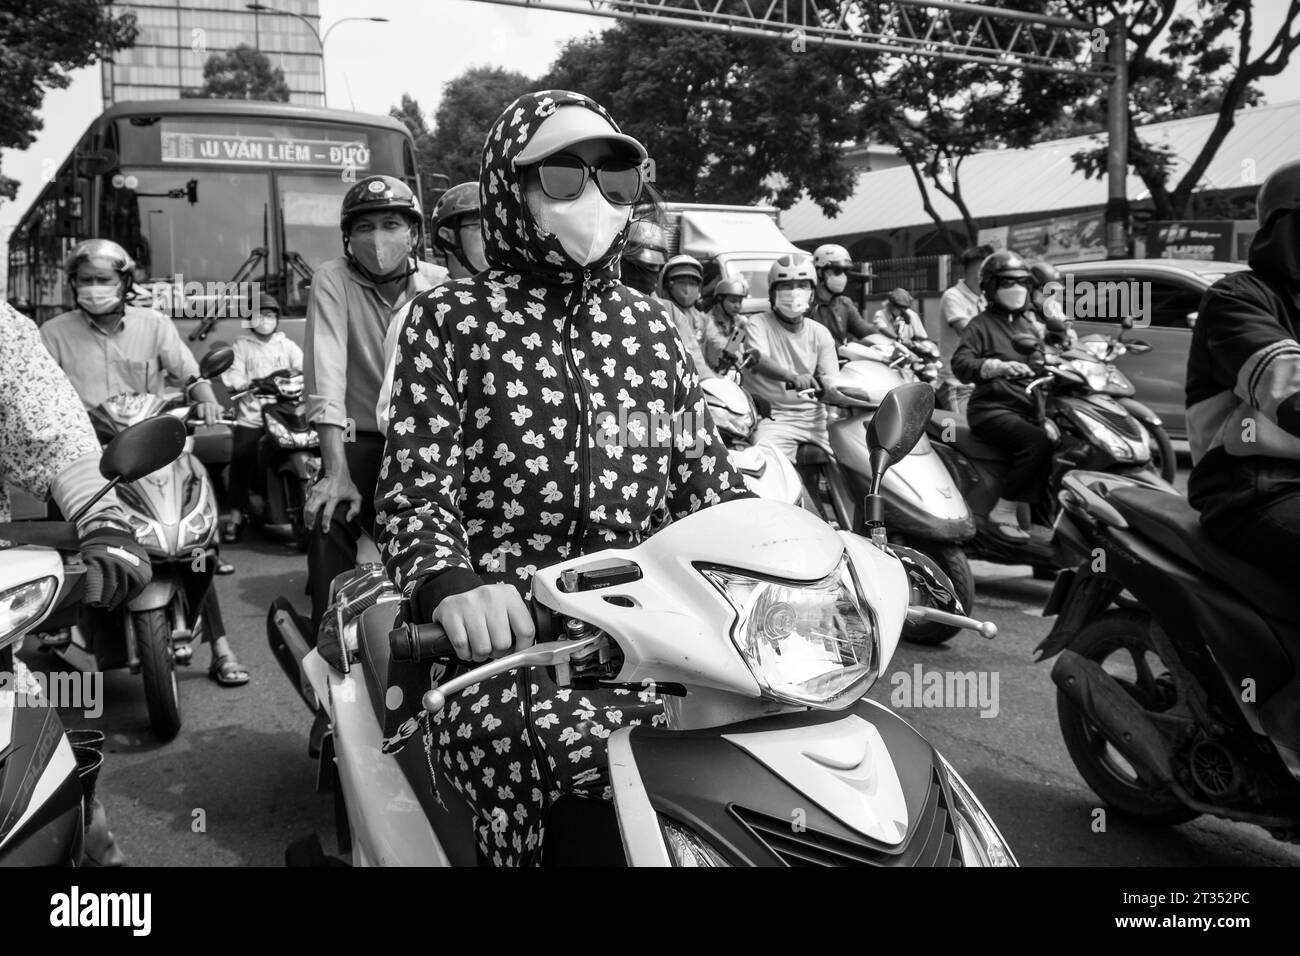 Vietnam, Ho Chi Minh City, Saigon, motorcycle traffic Stock Photo